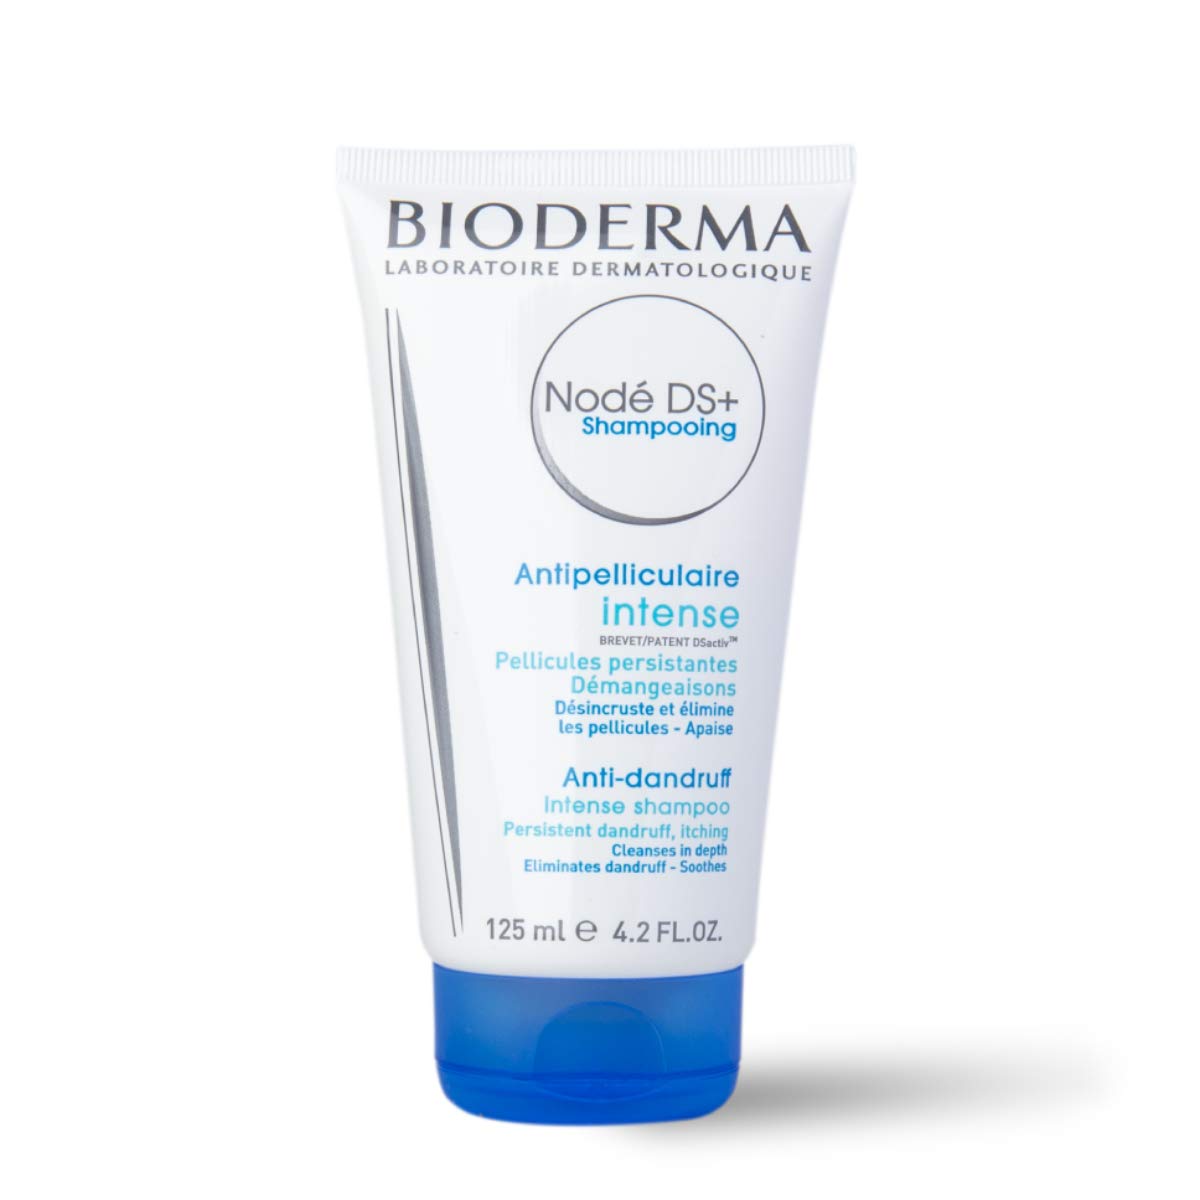 Bioderma Nodé DS+ Shampoo, Anti Dandruff Intense Shampoo (125 ml) Bioderma